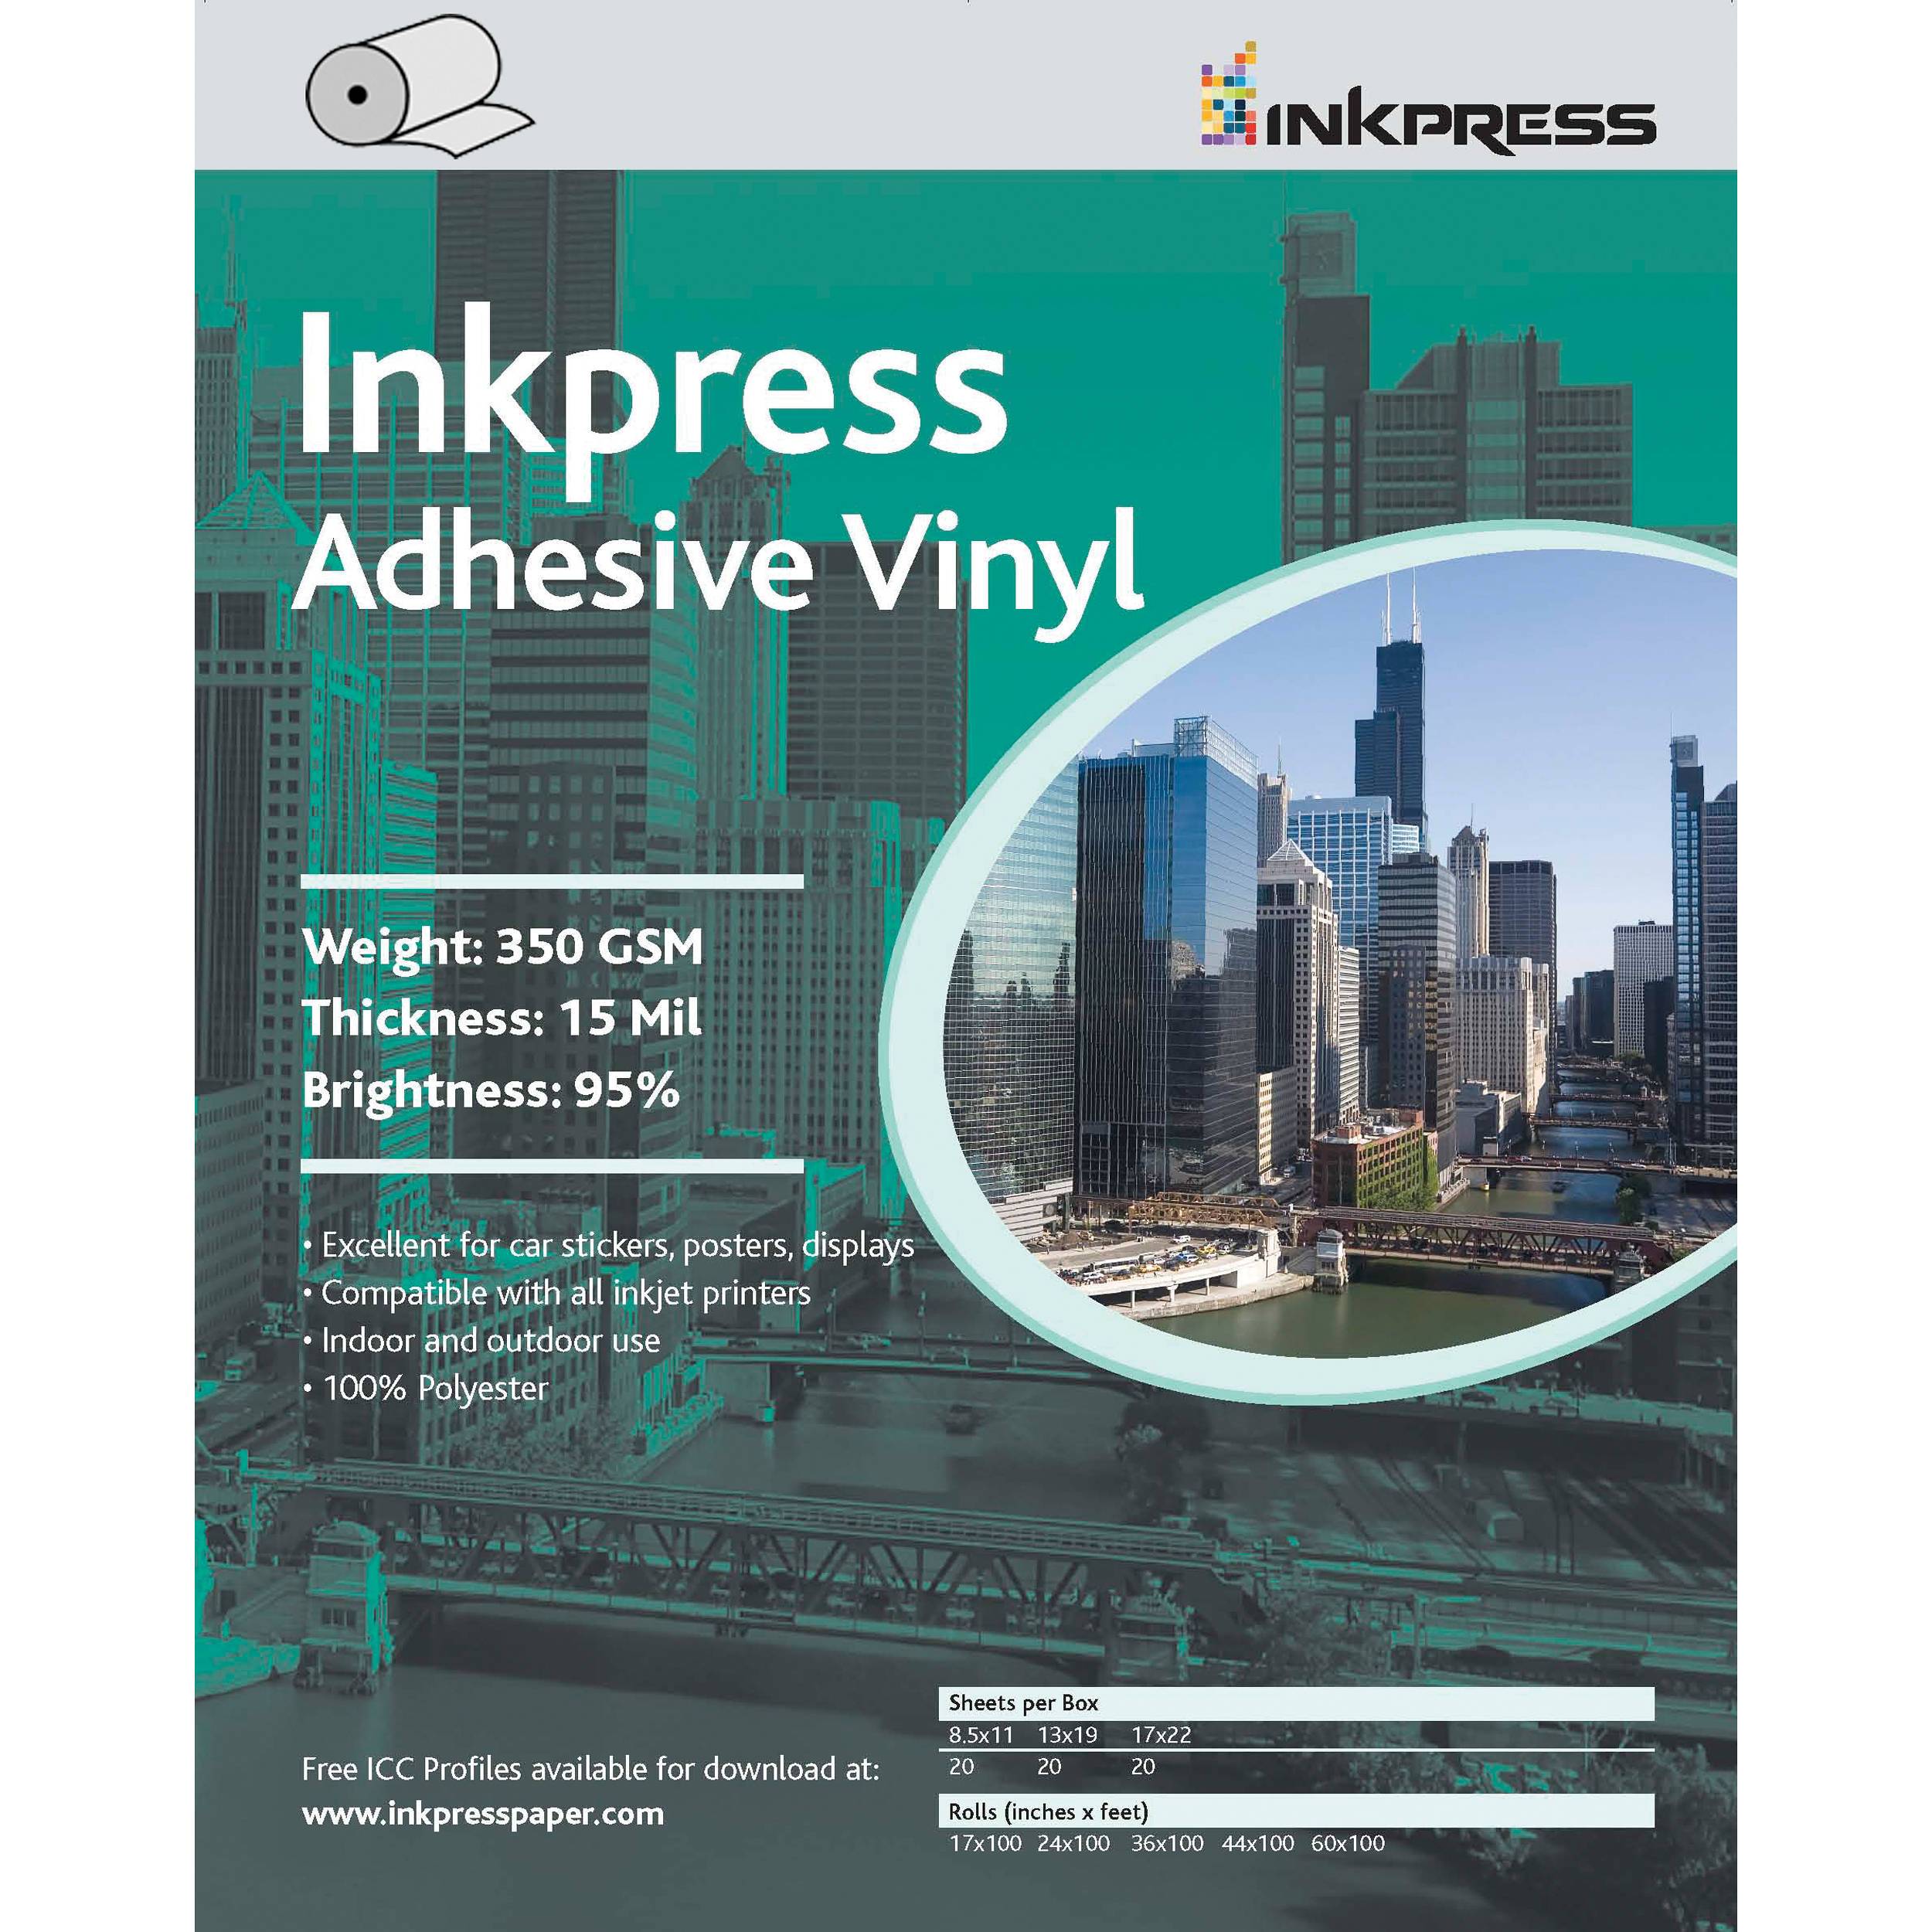 Inkpress Media Adhesive Vinyl 350 GSM 17"x60' Roll